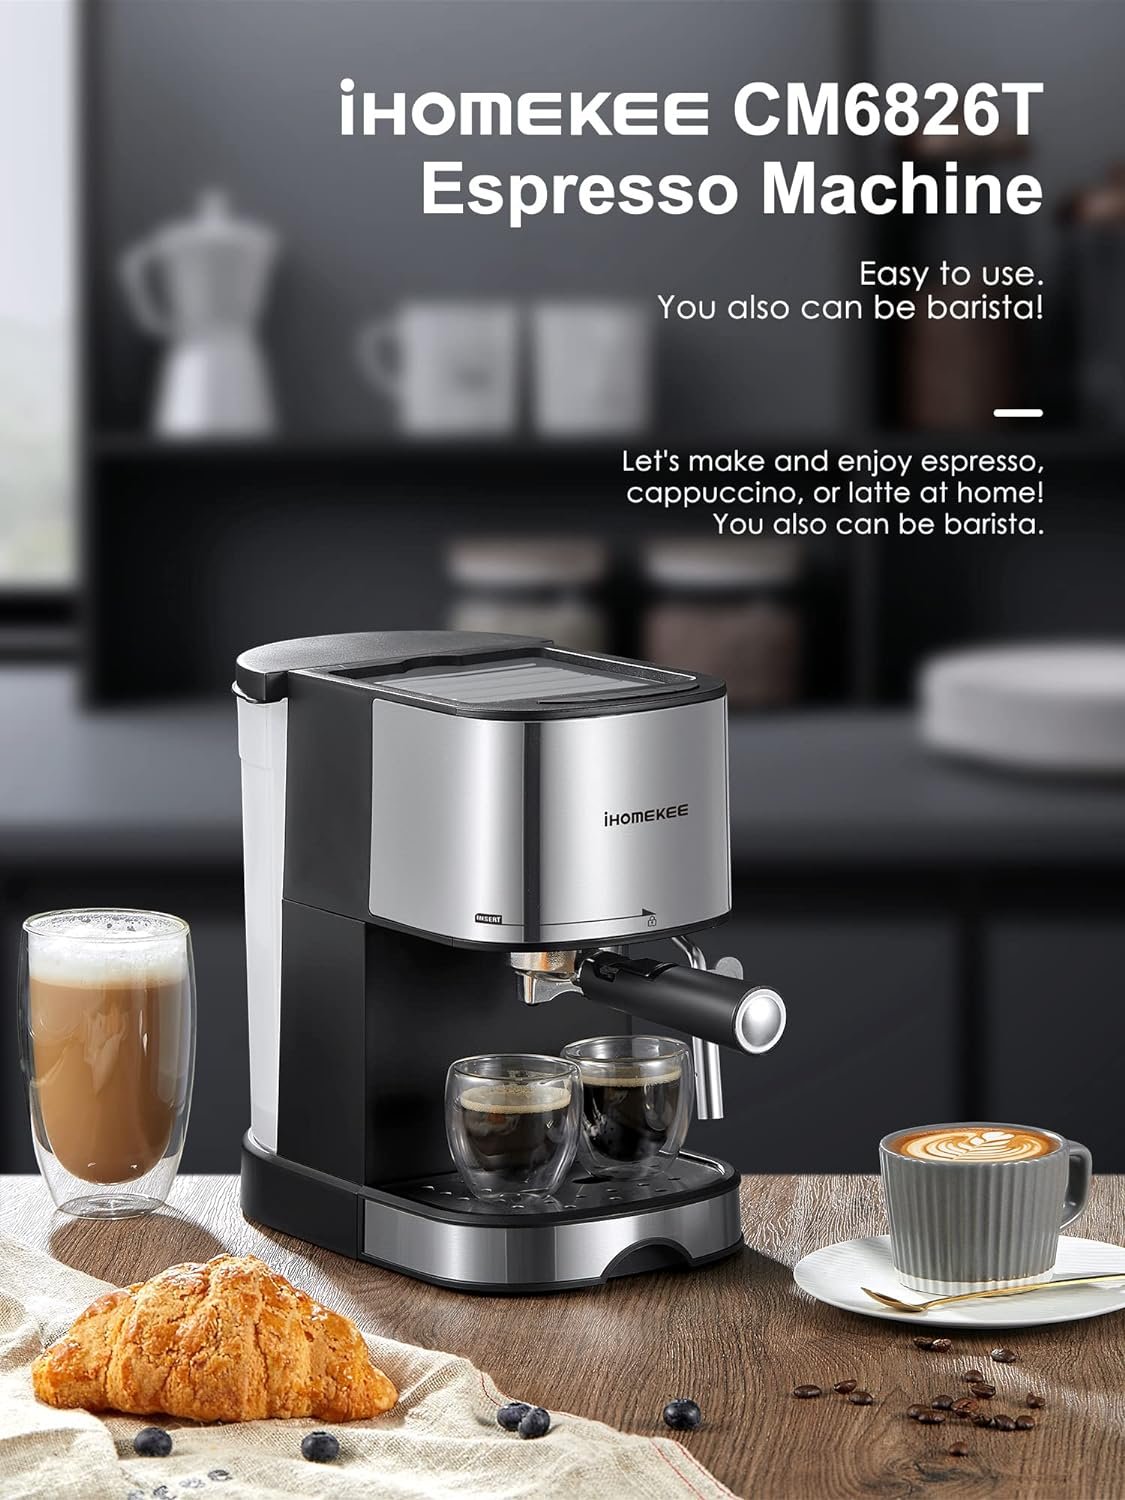 Ihomekee Espresso Machine 15 Bar Pump Pressure, Espresso and Cappuccino Coffee Maker with Milk Frother/Steam Wand for Latte, Mocha, Cappuccino, Silver - CM6826T